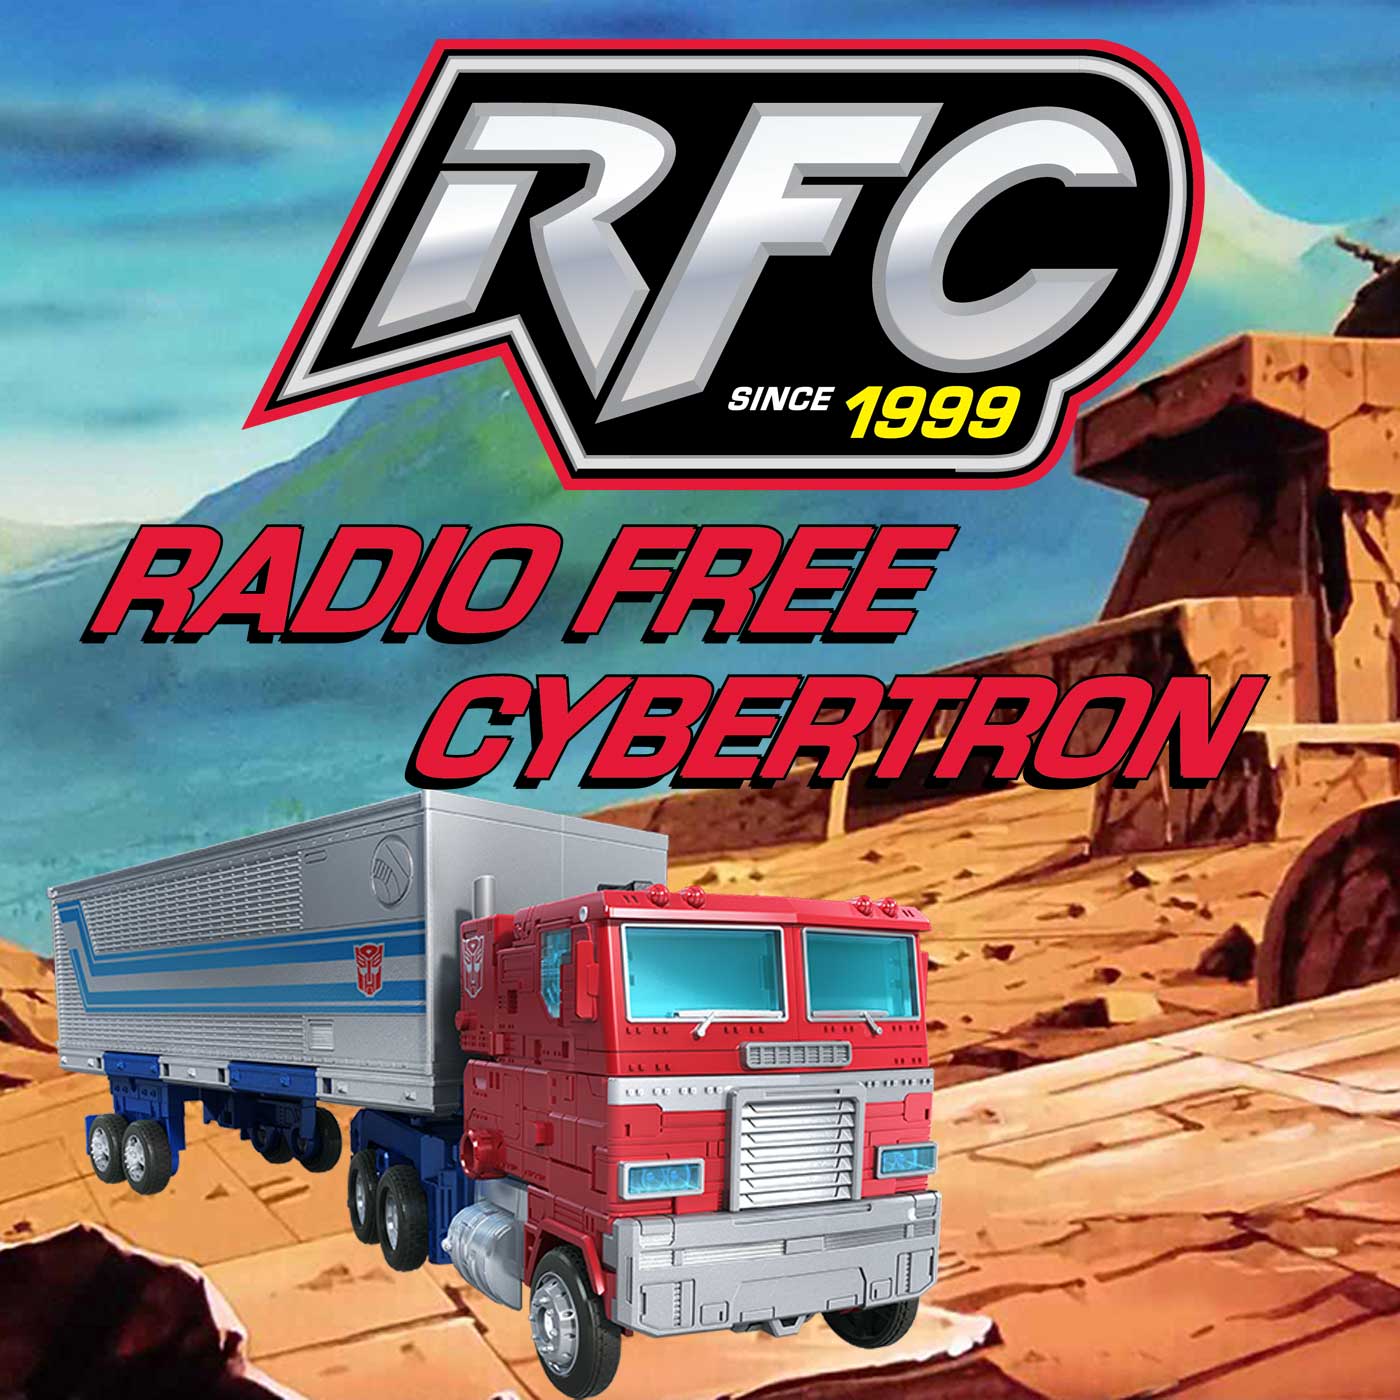 Toy Fair 19 Live Stream Podcast Radio Free Cybertron